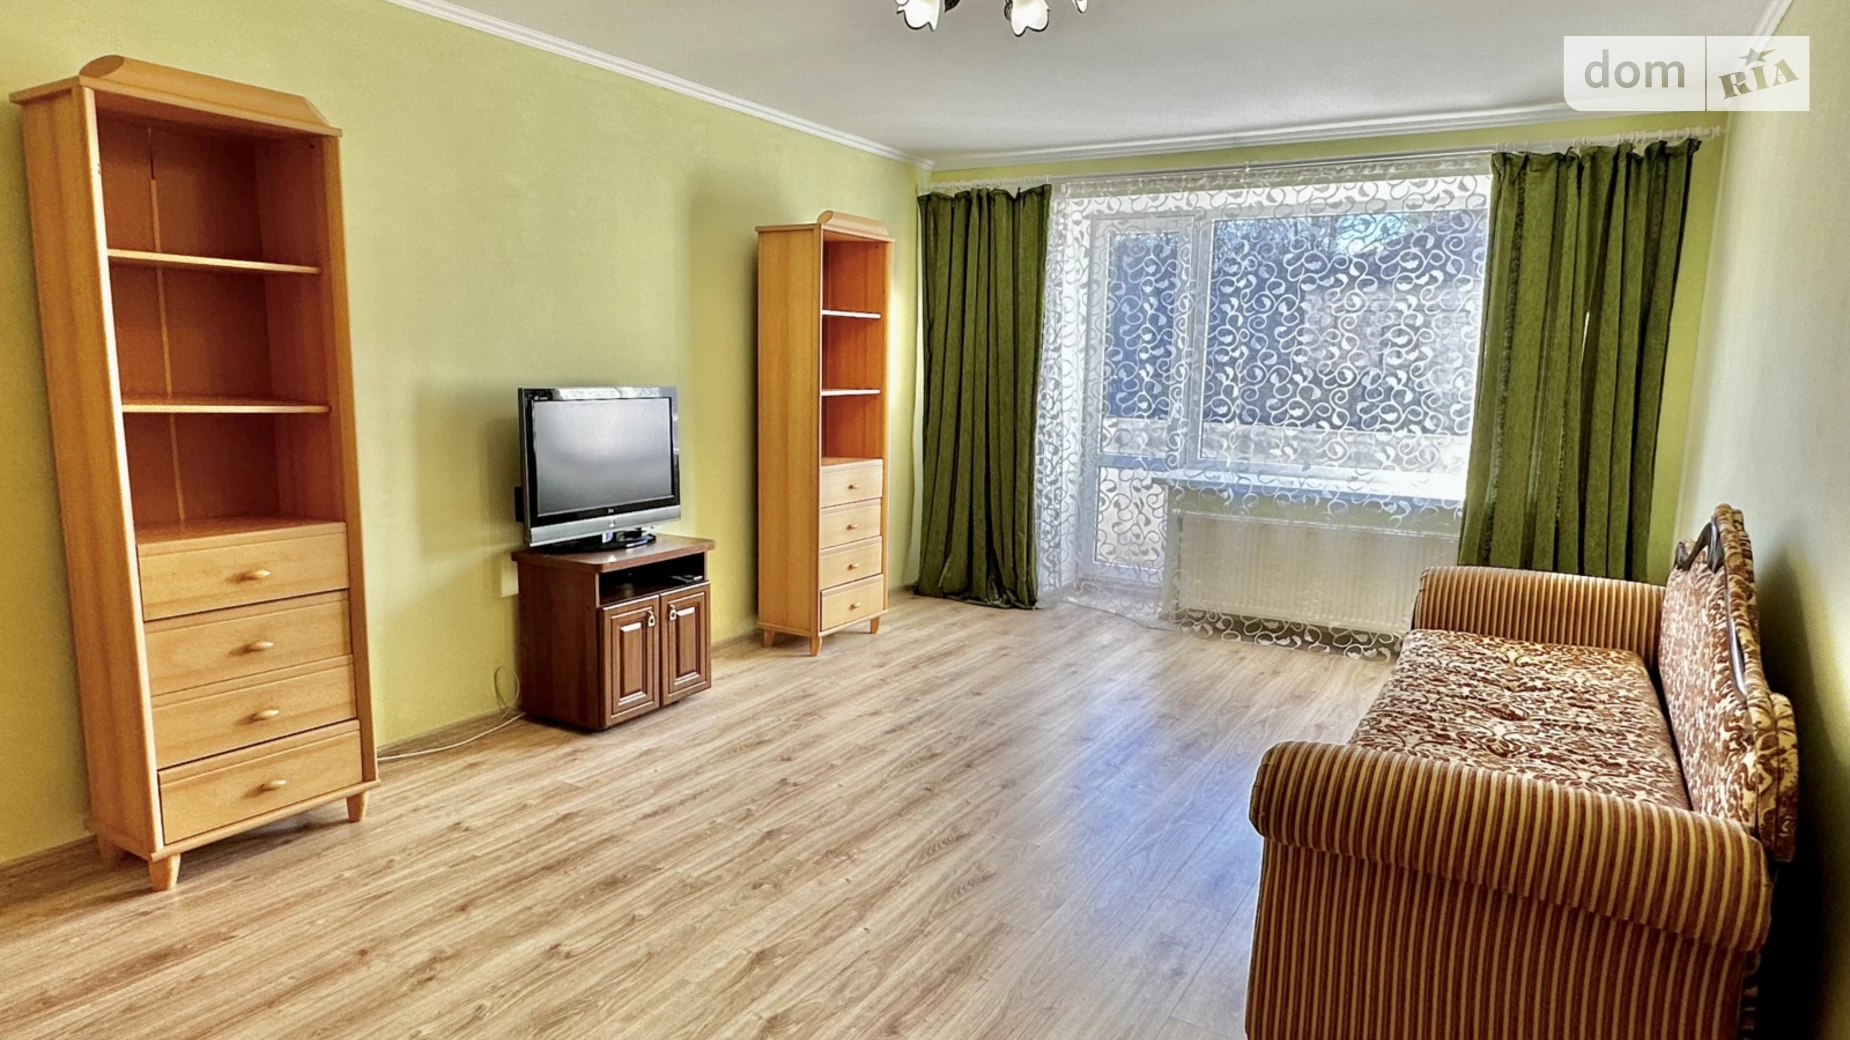 2-комнатная квартира 76 кв. м в Тернополе, ул. Бережанская, 10 - фото 2